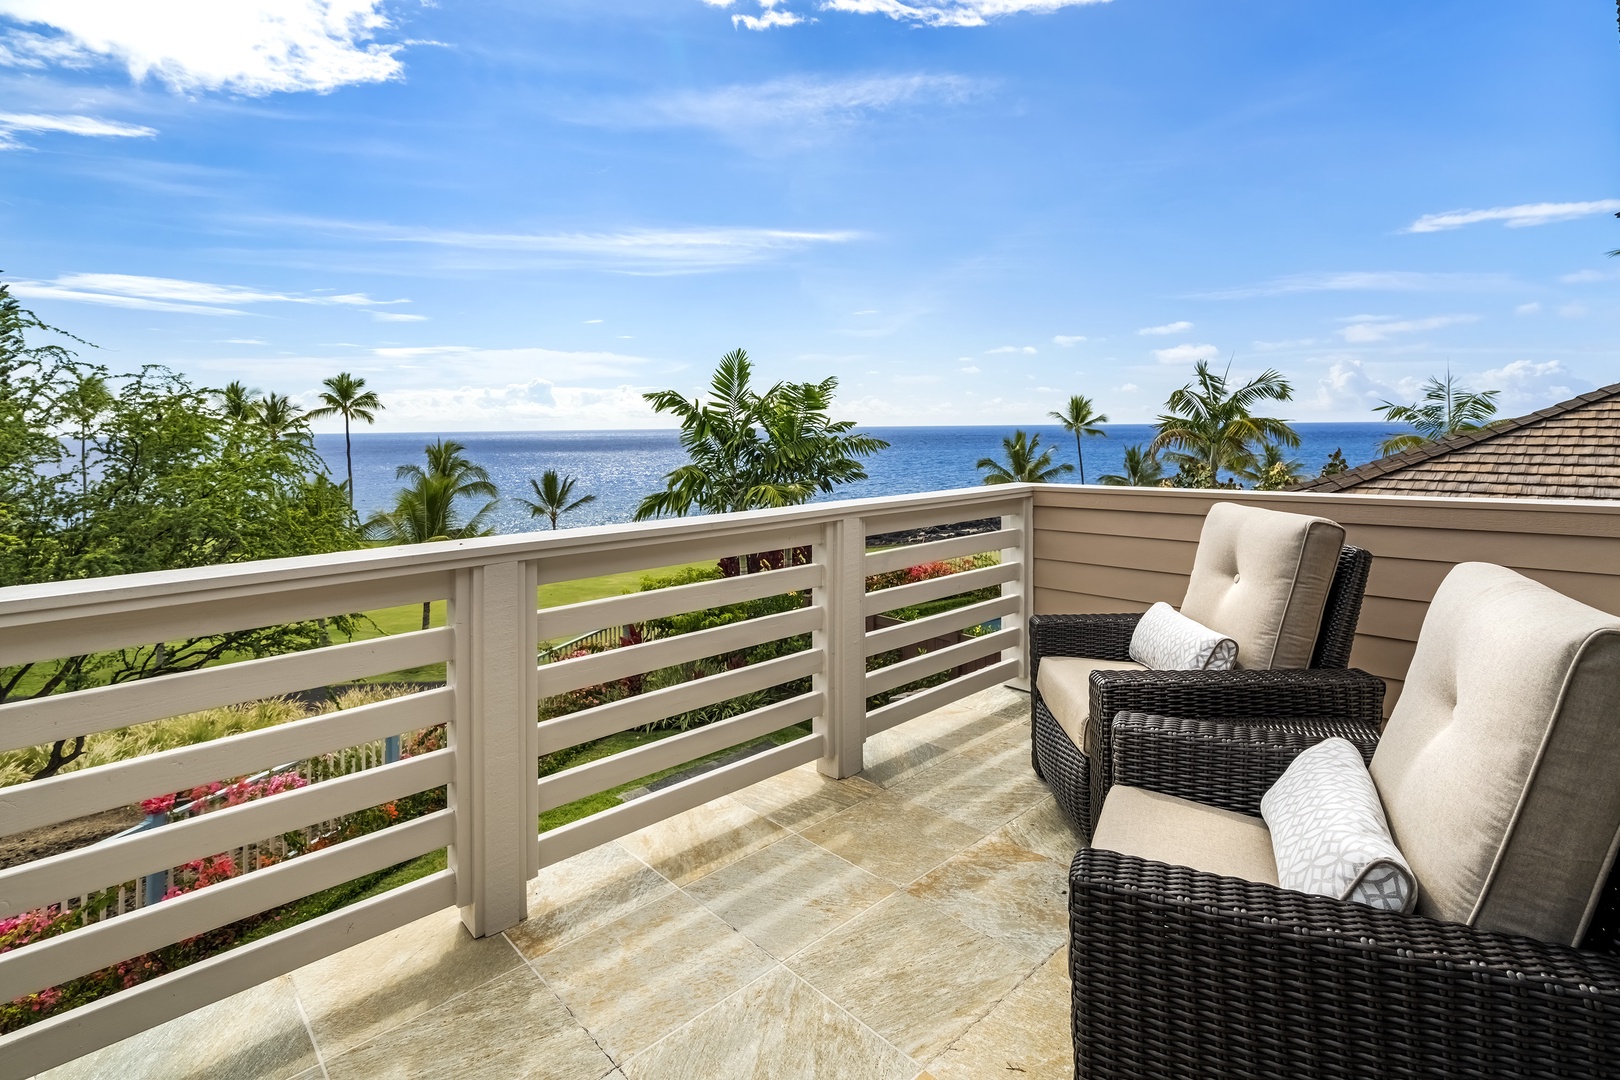 Kailua Kona Vacation Rentals, Golf Green - Primary bedroom Lanai with gorgeous views!